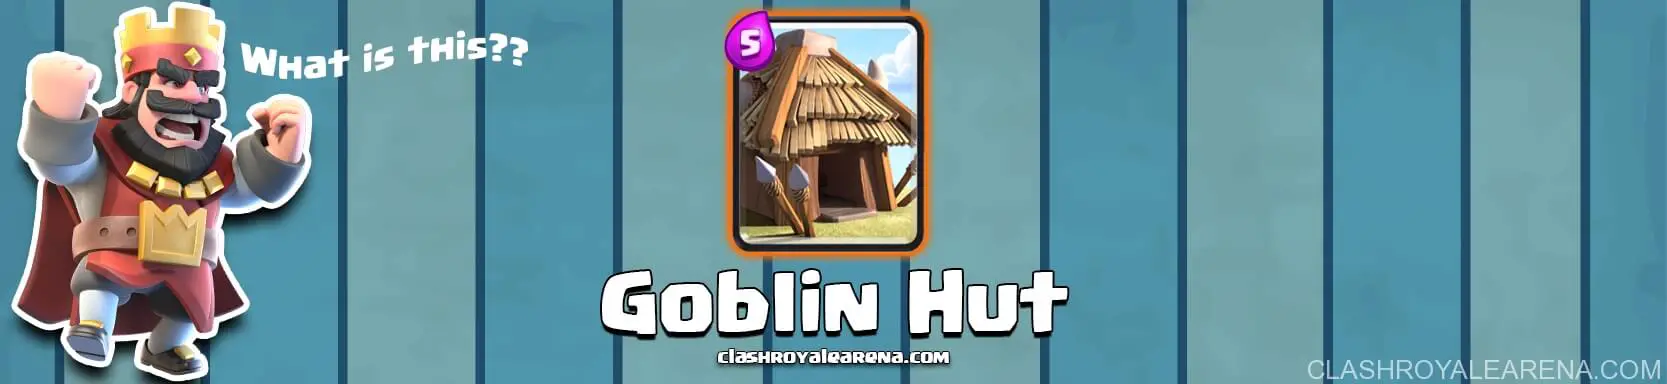 Goblin Hut Clash Royale - Strategies and Statistics